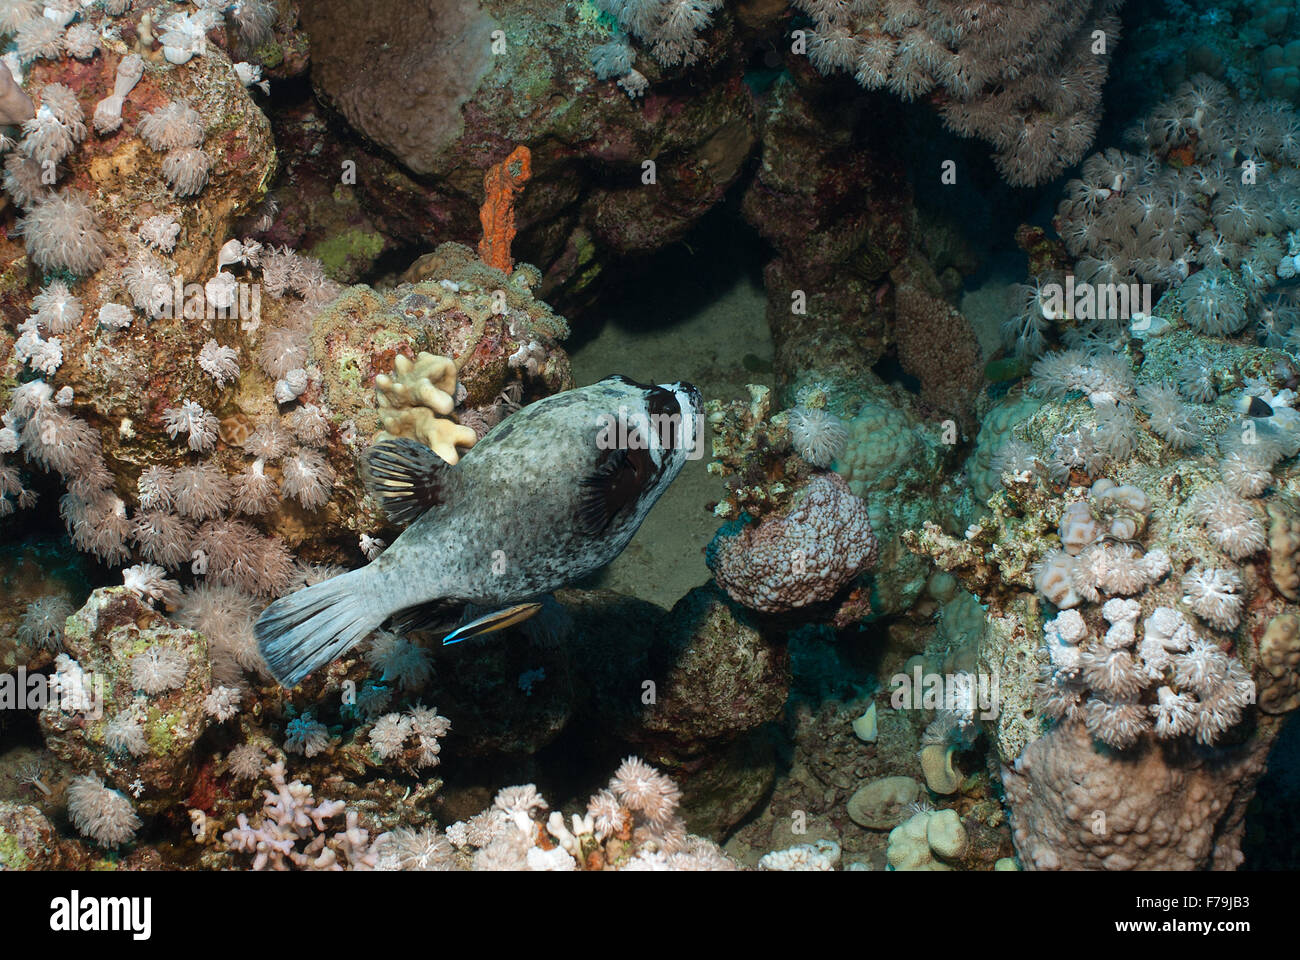 Puffferfish, Arothron diadematus, Tetraodontidae, Sharm el Sheikh, Red Sea, Egypt Stock Photo